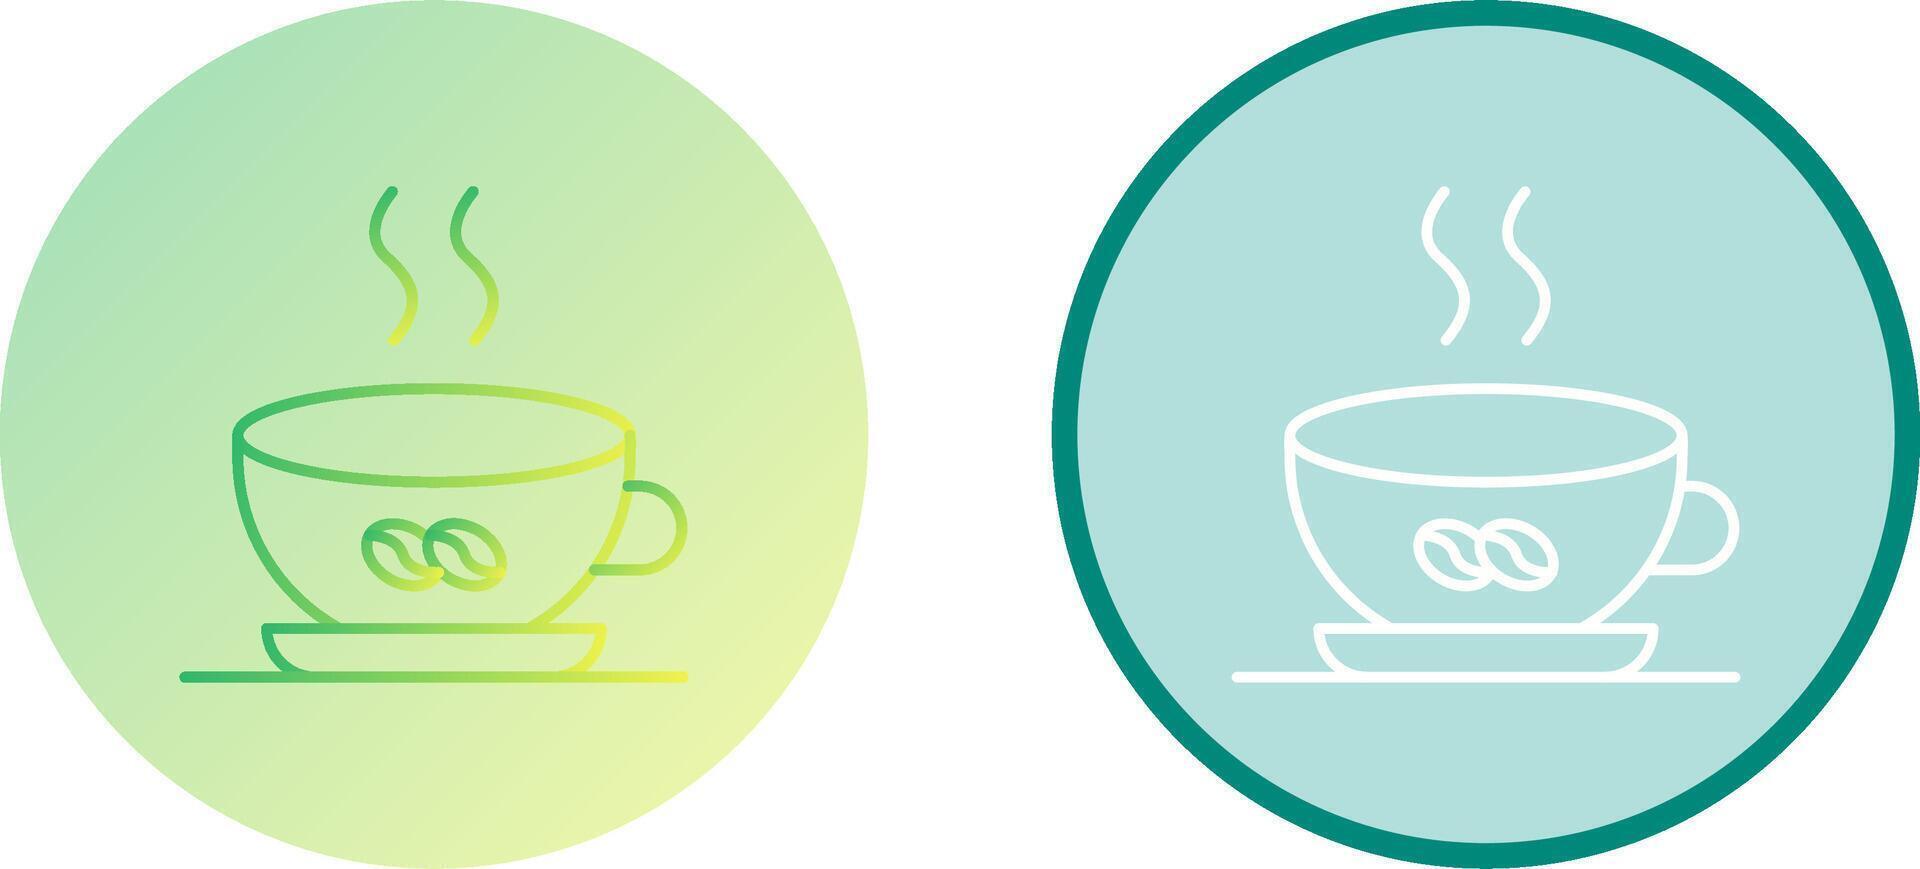 diseño de icono de taza de café vector